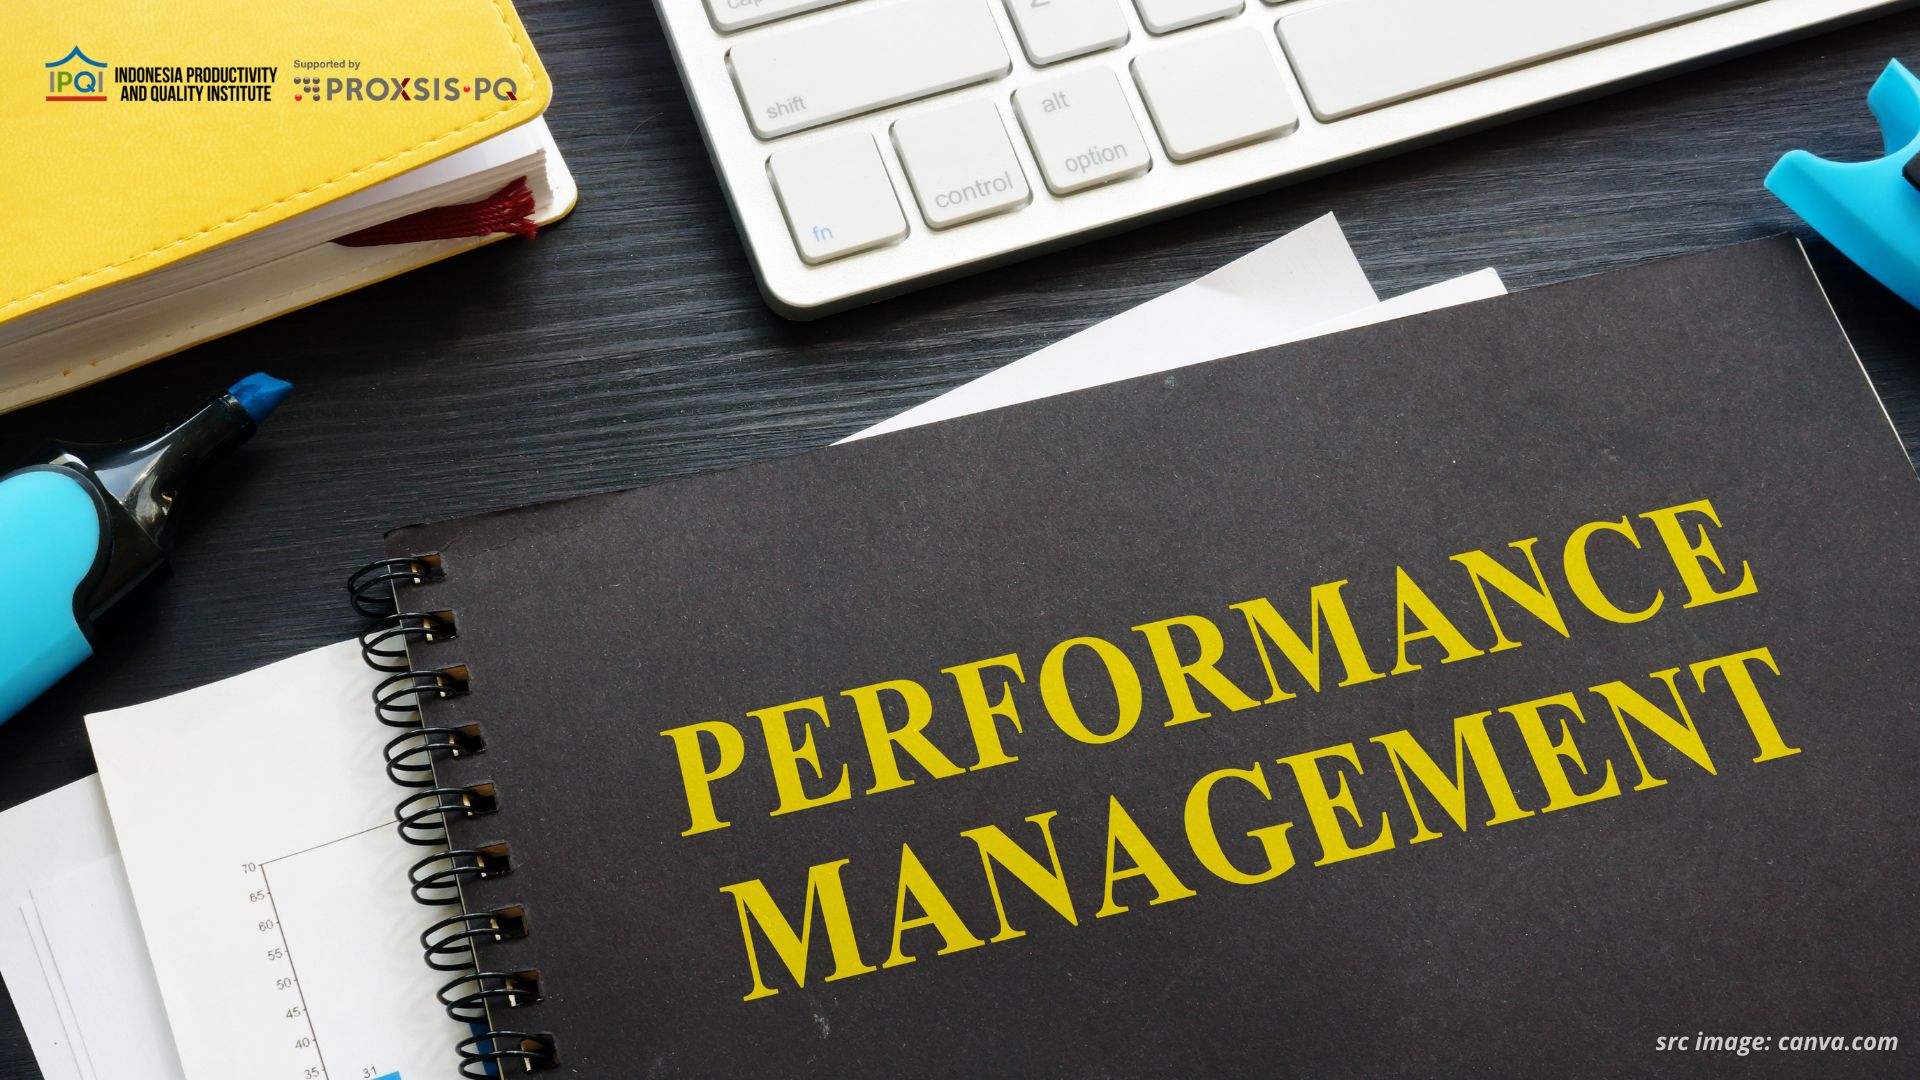 Mengenal Performance Management System: Pengertian, Fungsi, Komponen, dan Ciri-Cirinya